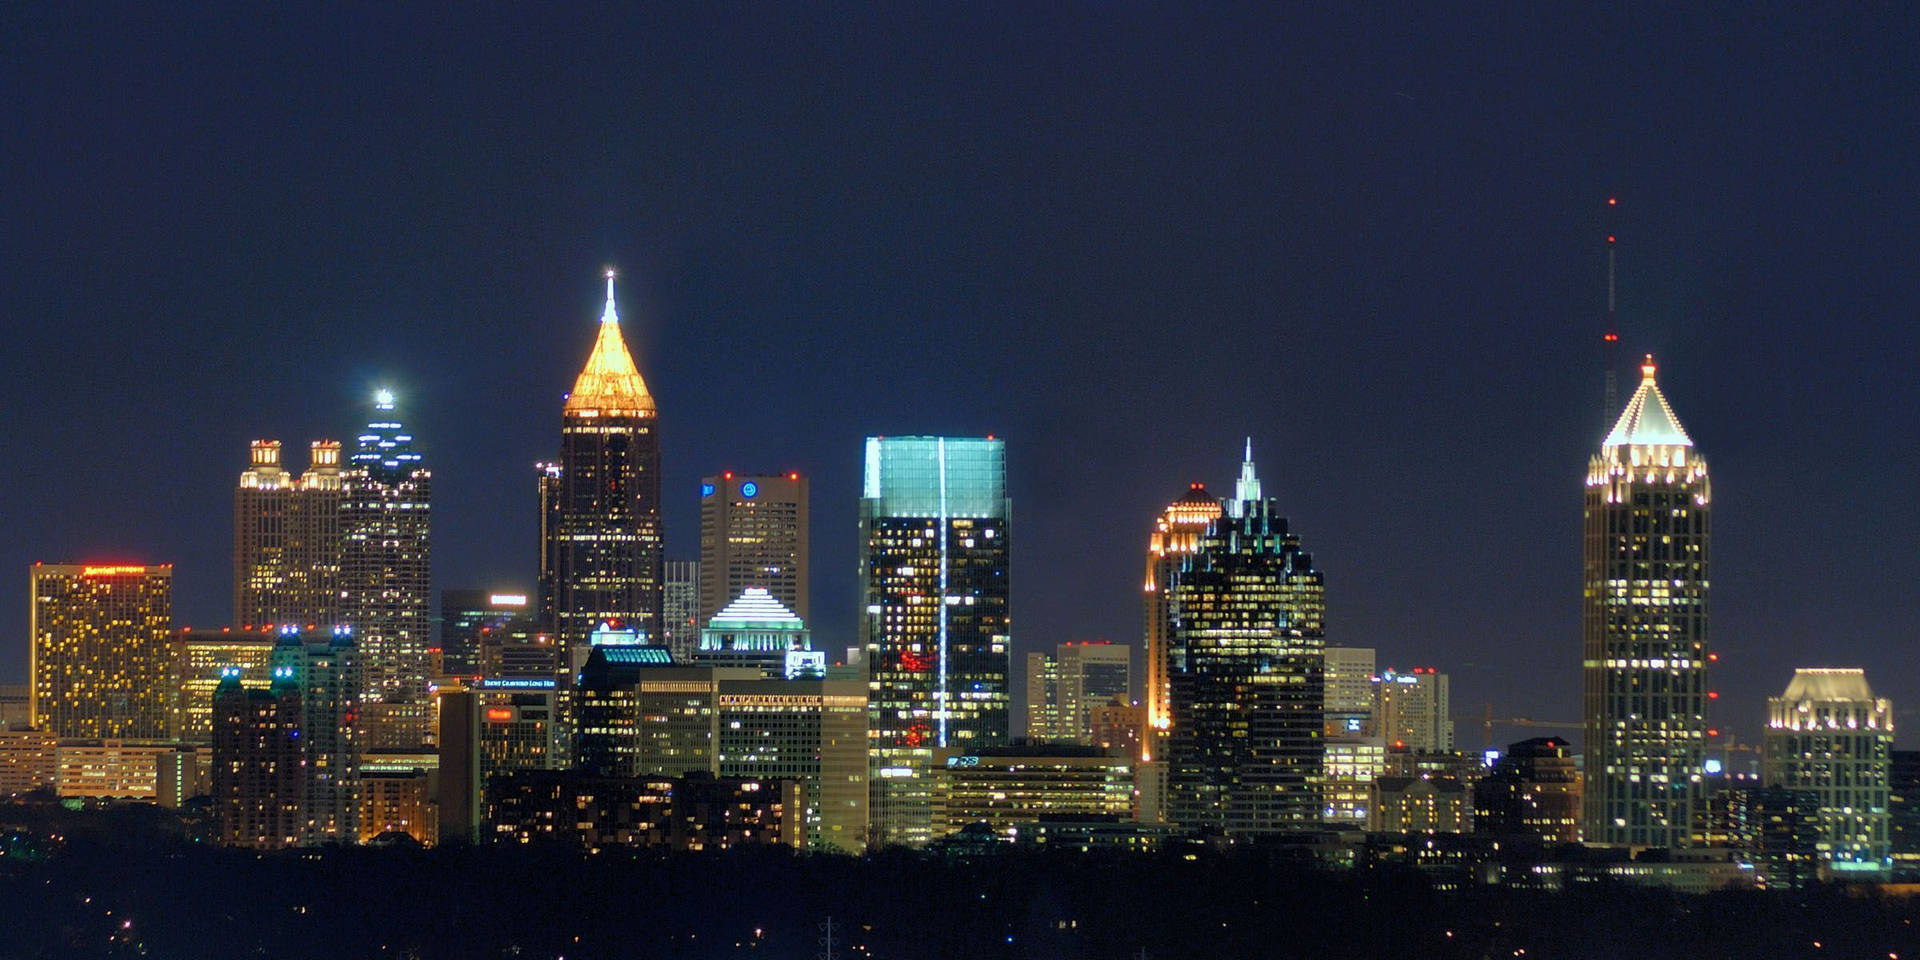 Turner Broadcasting Tower In Atlanta Background